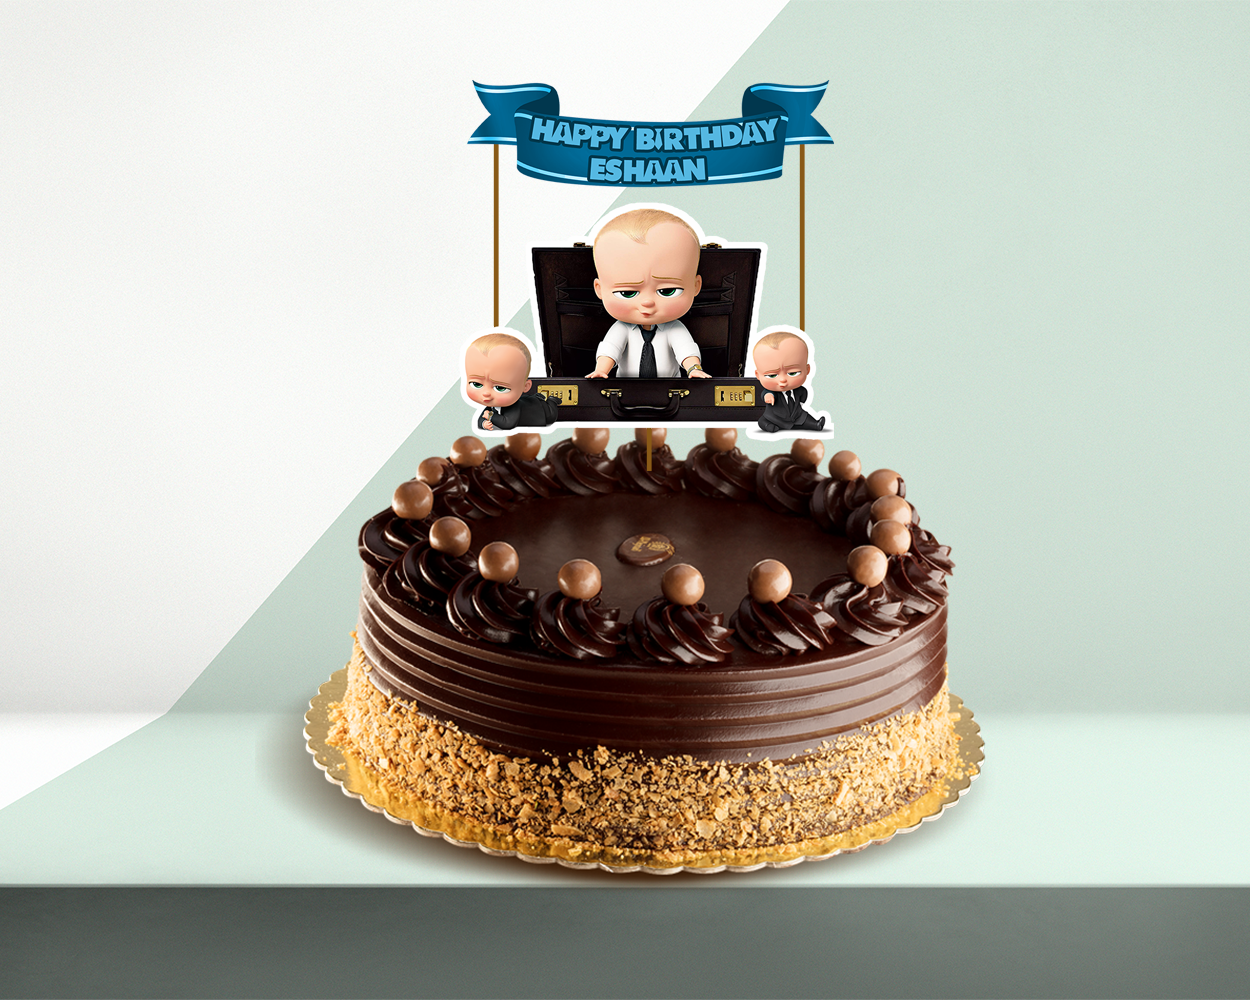 The Boss Birthday Cake - Decorated Cake by MLADMAN - CakesDecor